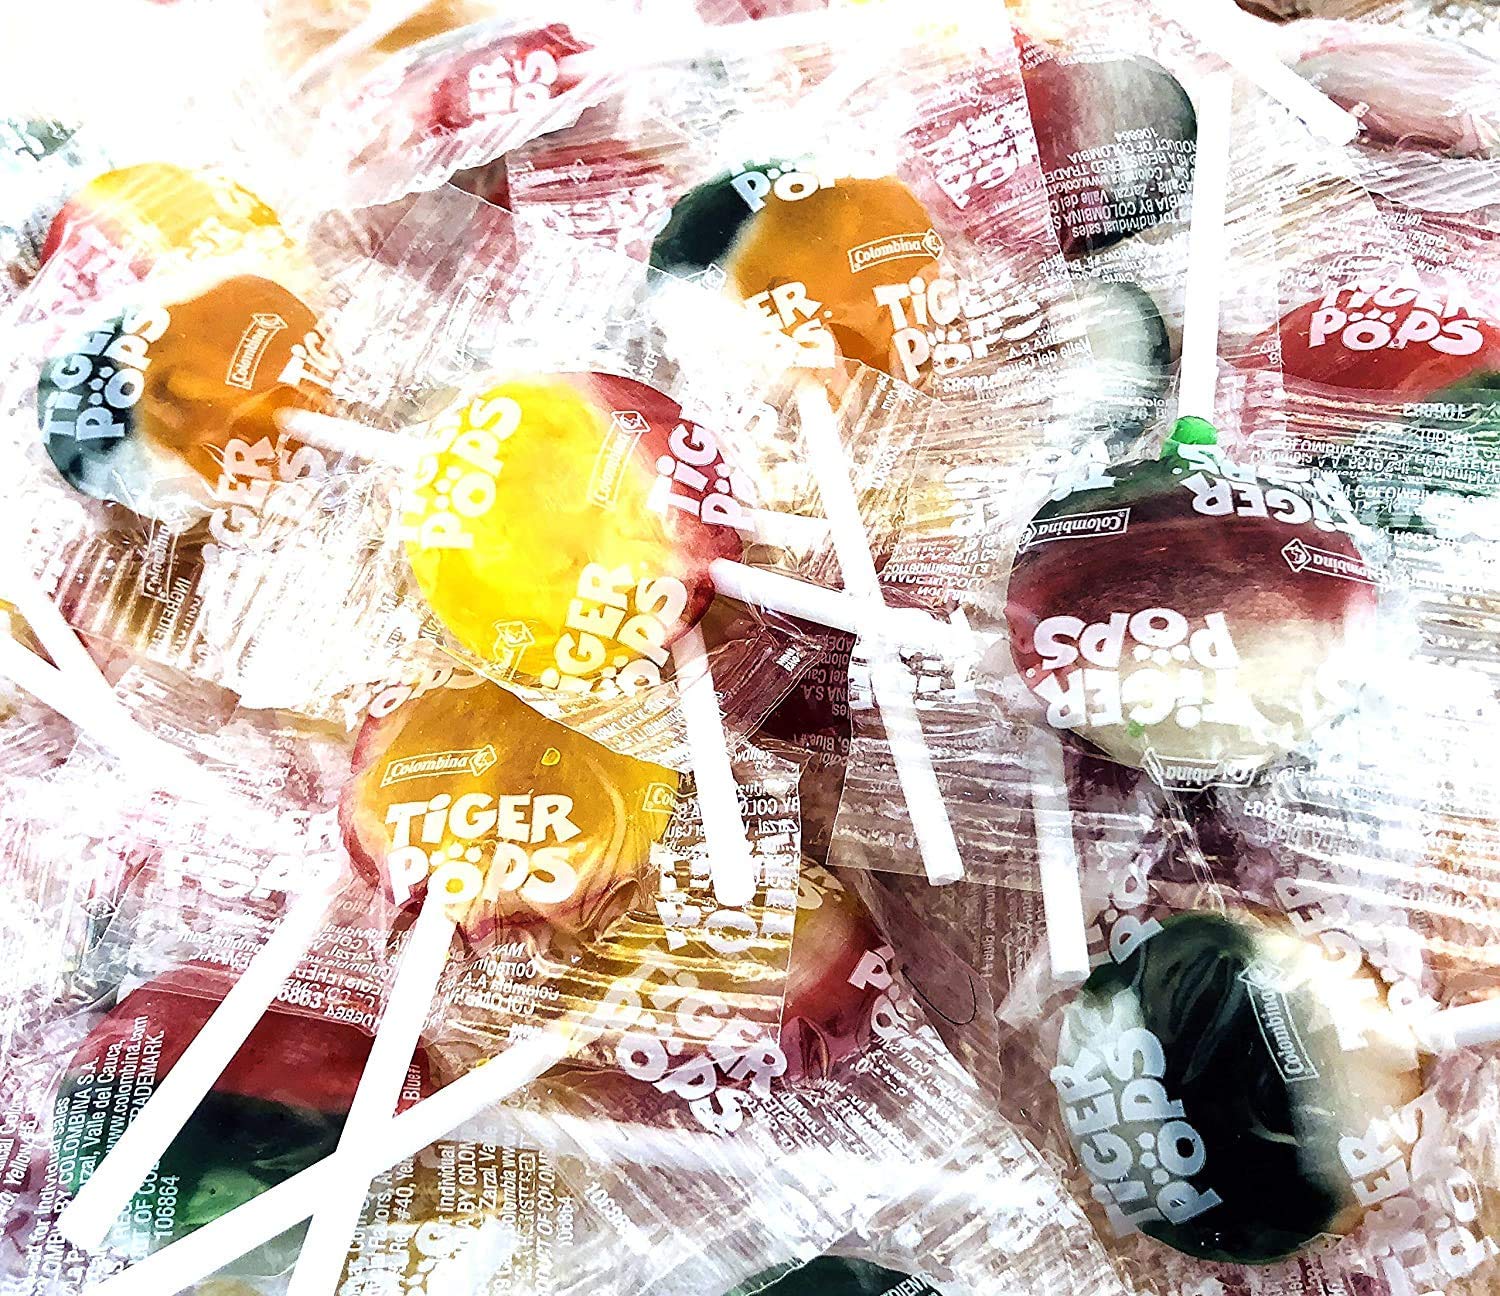  LaetaFood Tiger Pops Original Assorted Pops Suckers Fruit Flavored, Hard Candy Lollipops (Pack of 400)